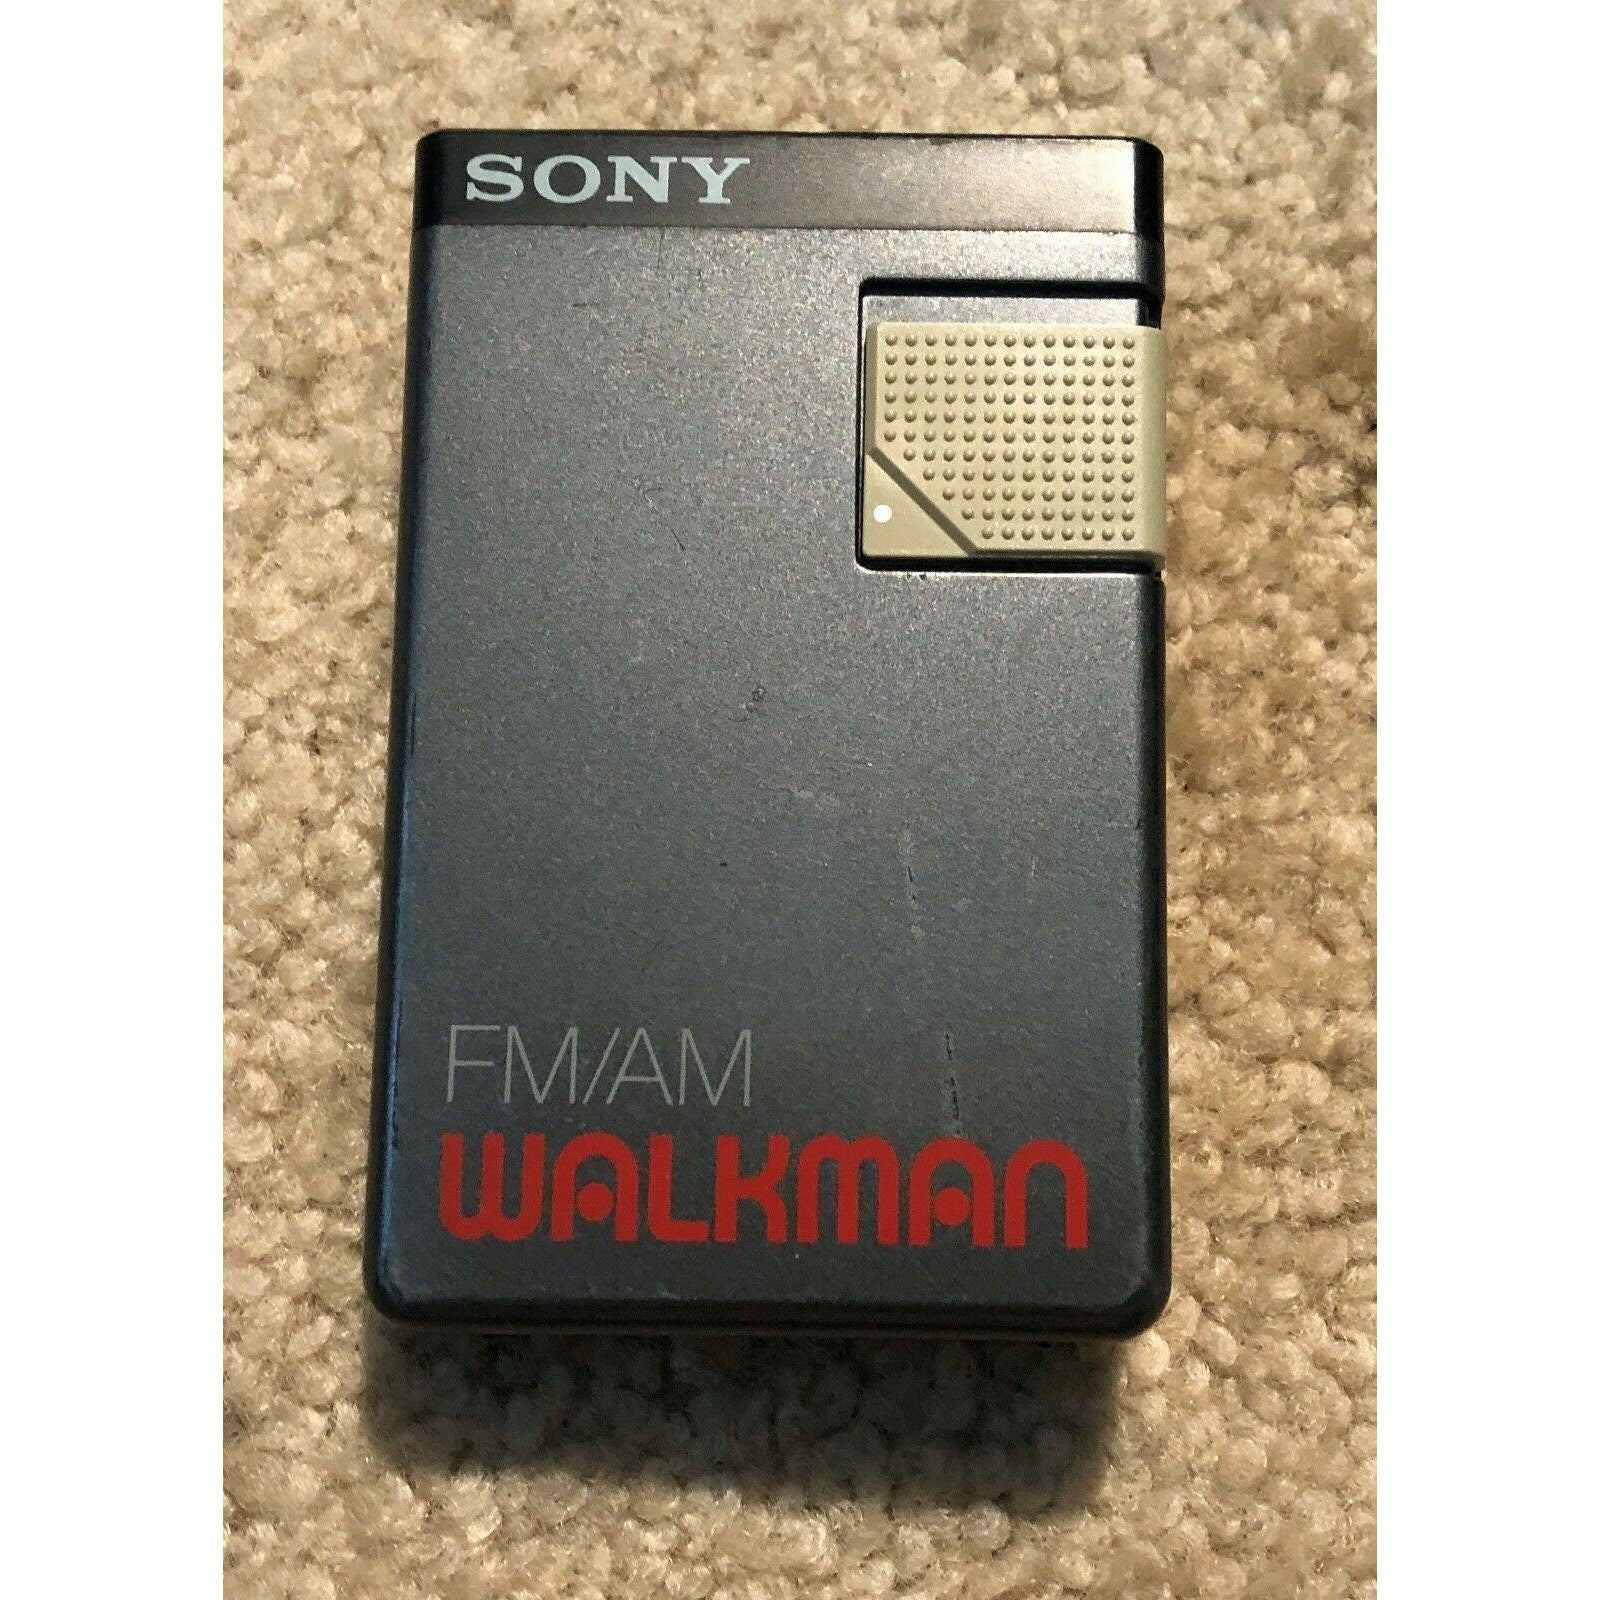 Sony Walkman FM / AM Stereo Model SRF-19W